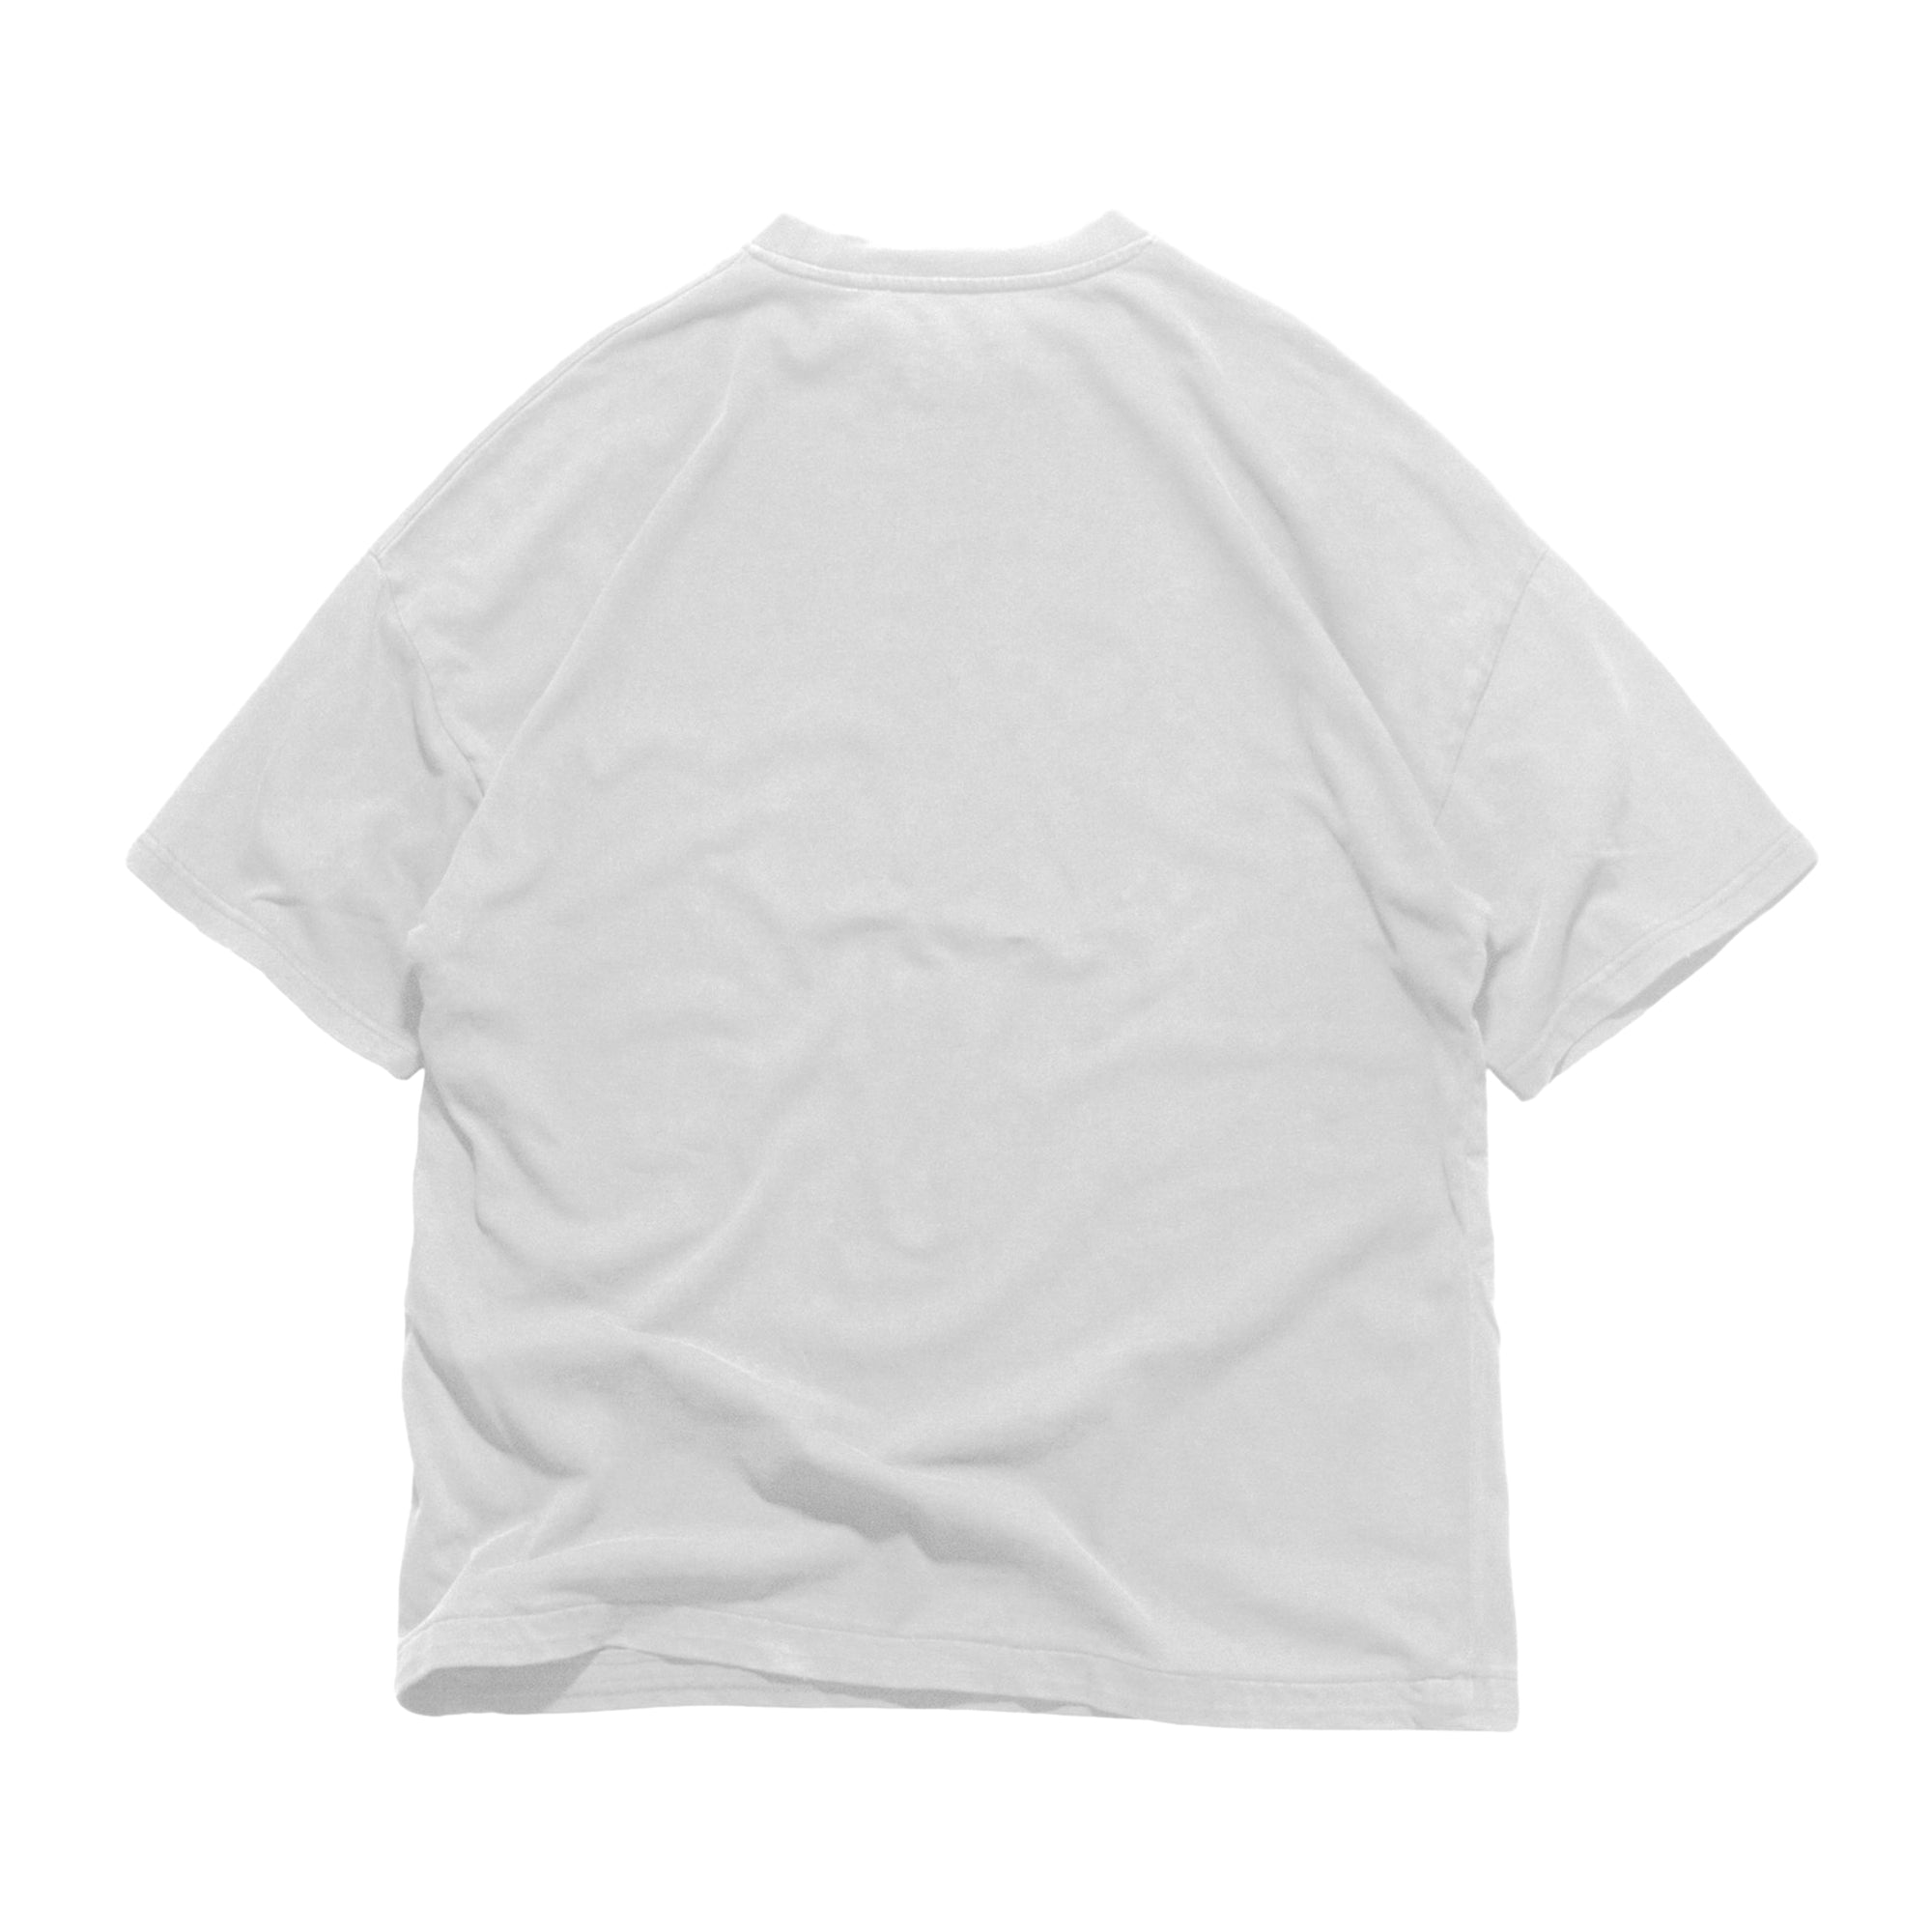 No Bad Energy™ 3 T-Shirt